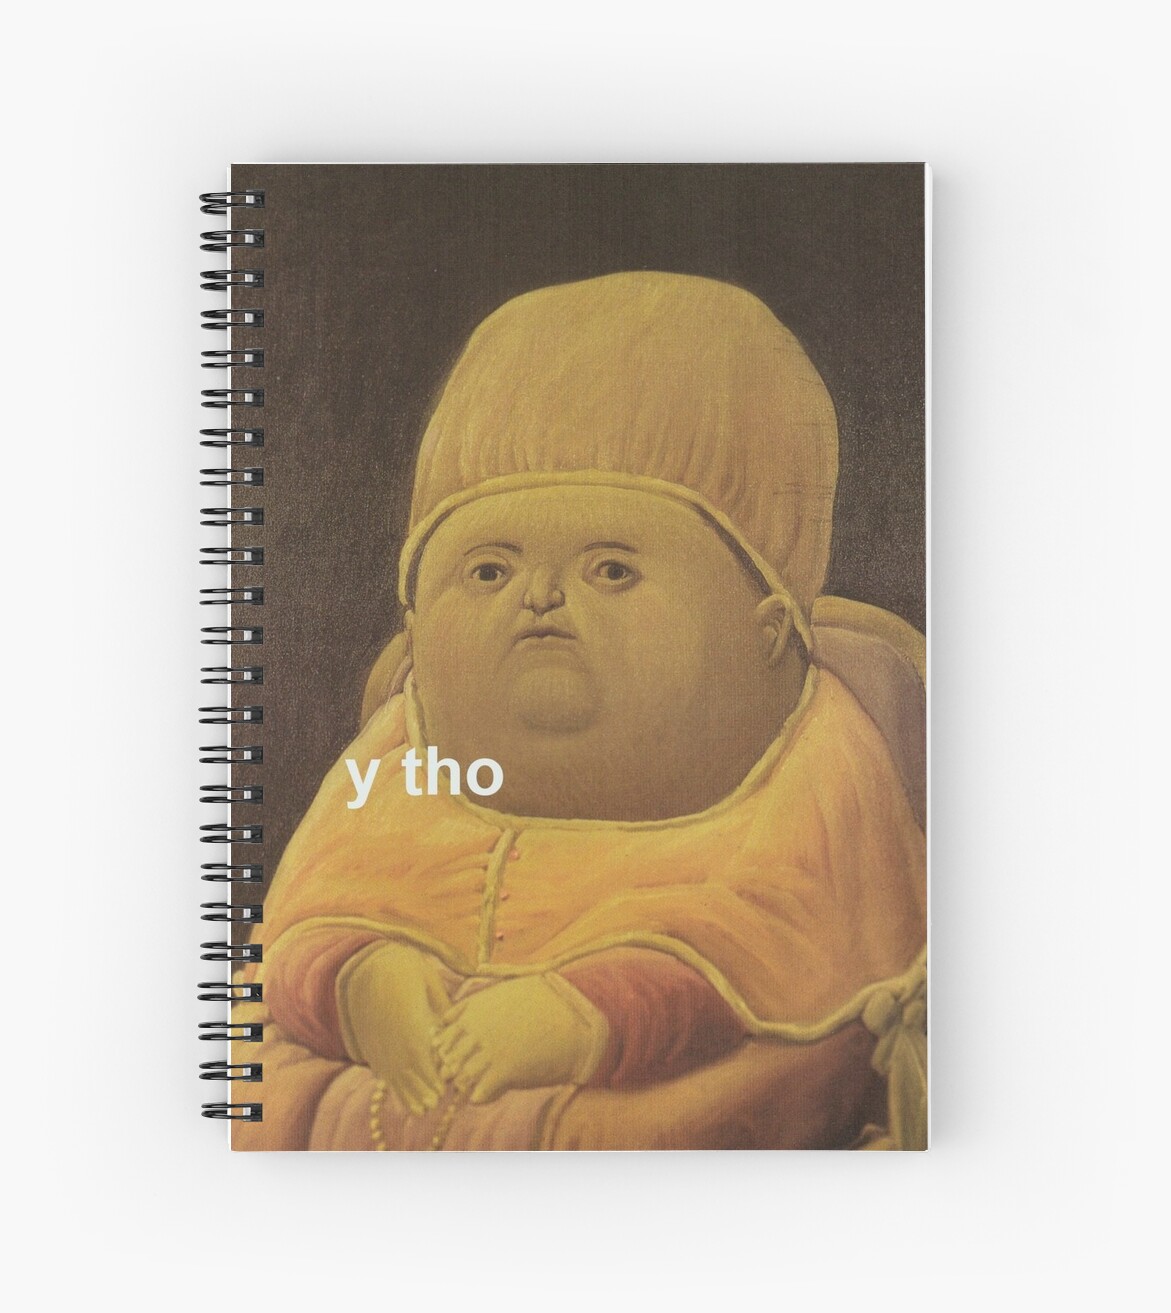 Y Tho Dank Meme Spiral Notebooks By Prodesigner2 Redbubble